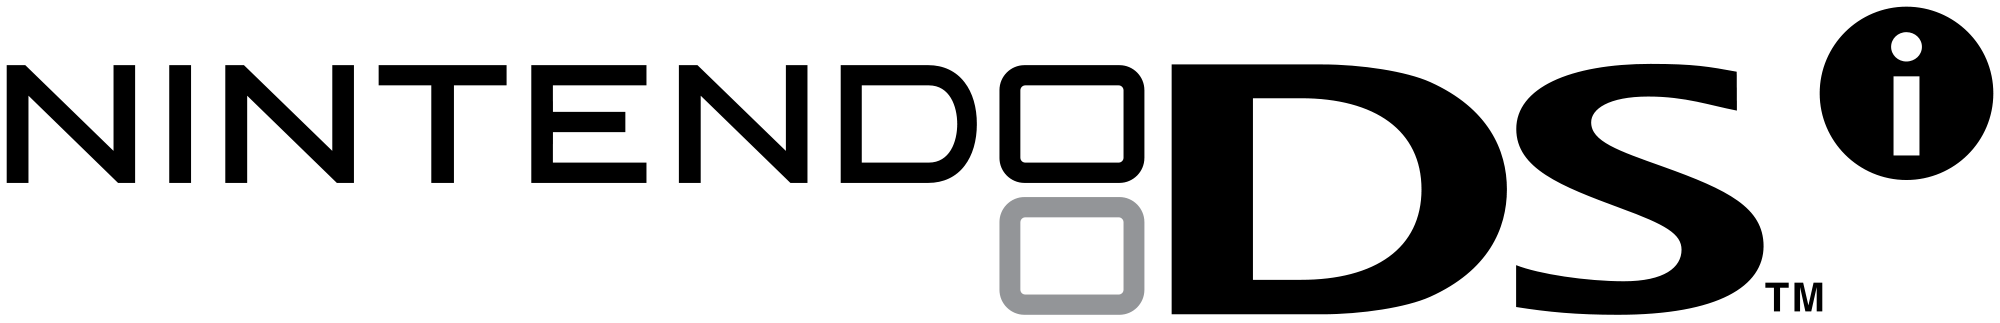 Nintendo DS Logo - File:Nintendo DSi logo.svg - Wikimedia Commons